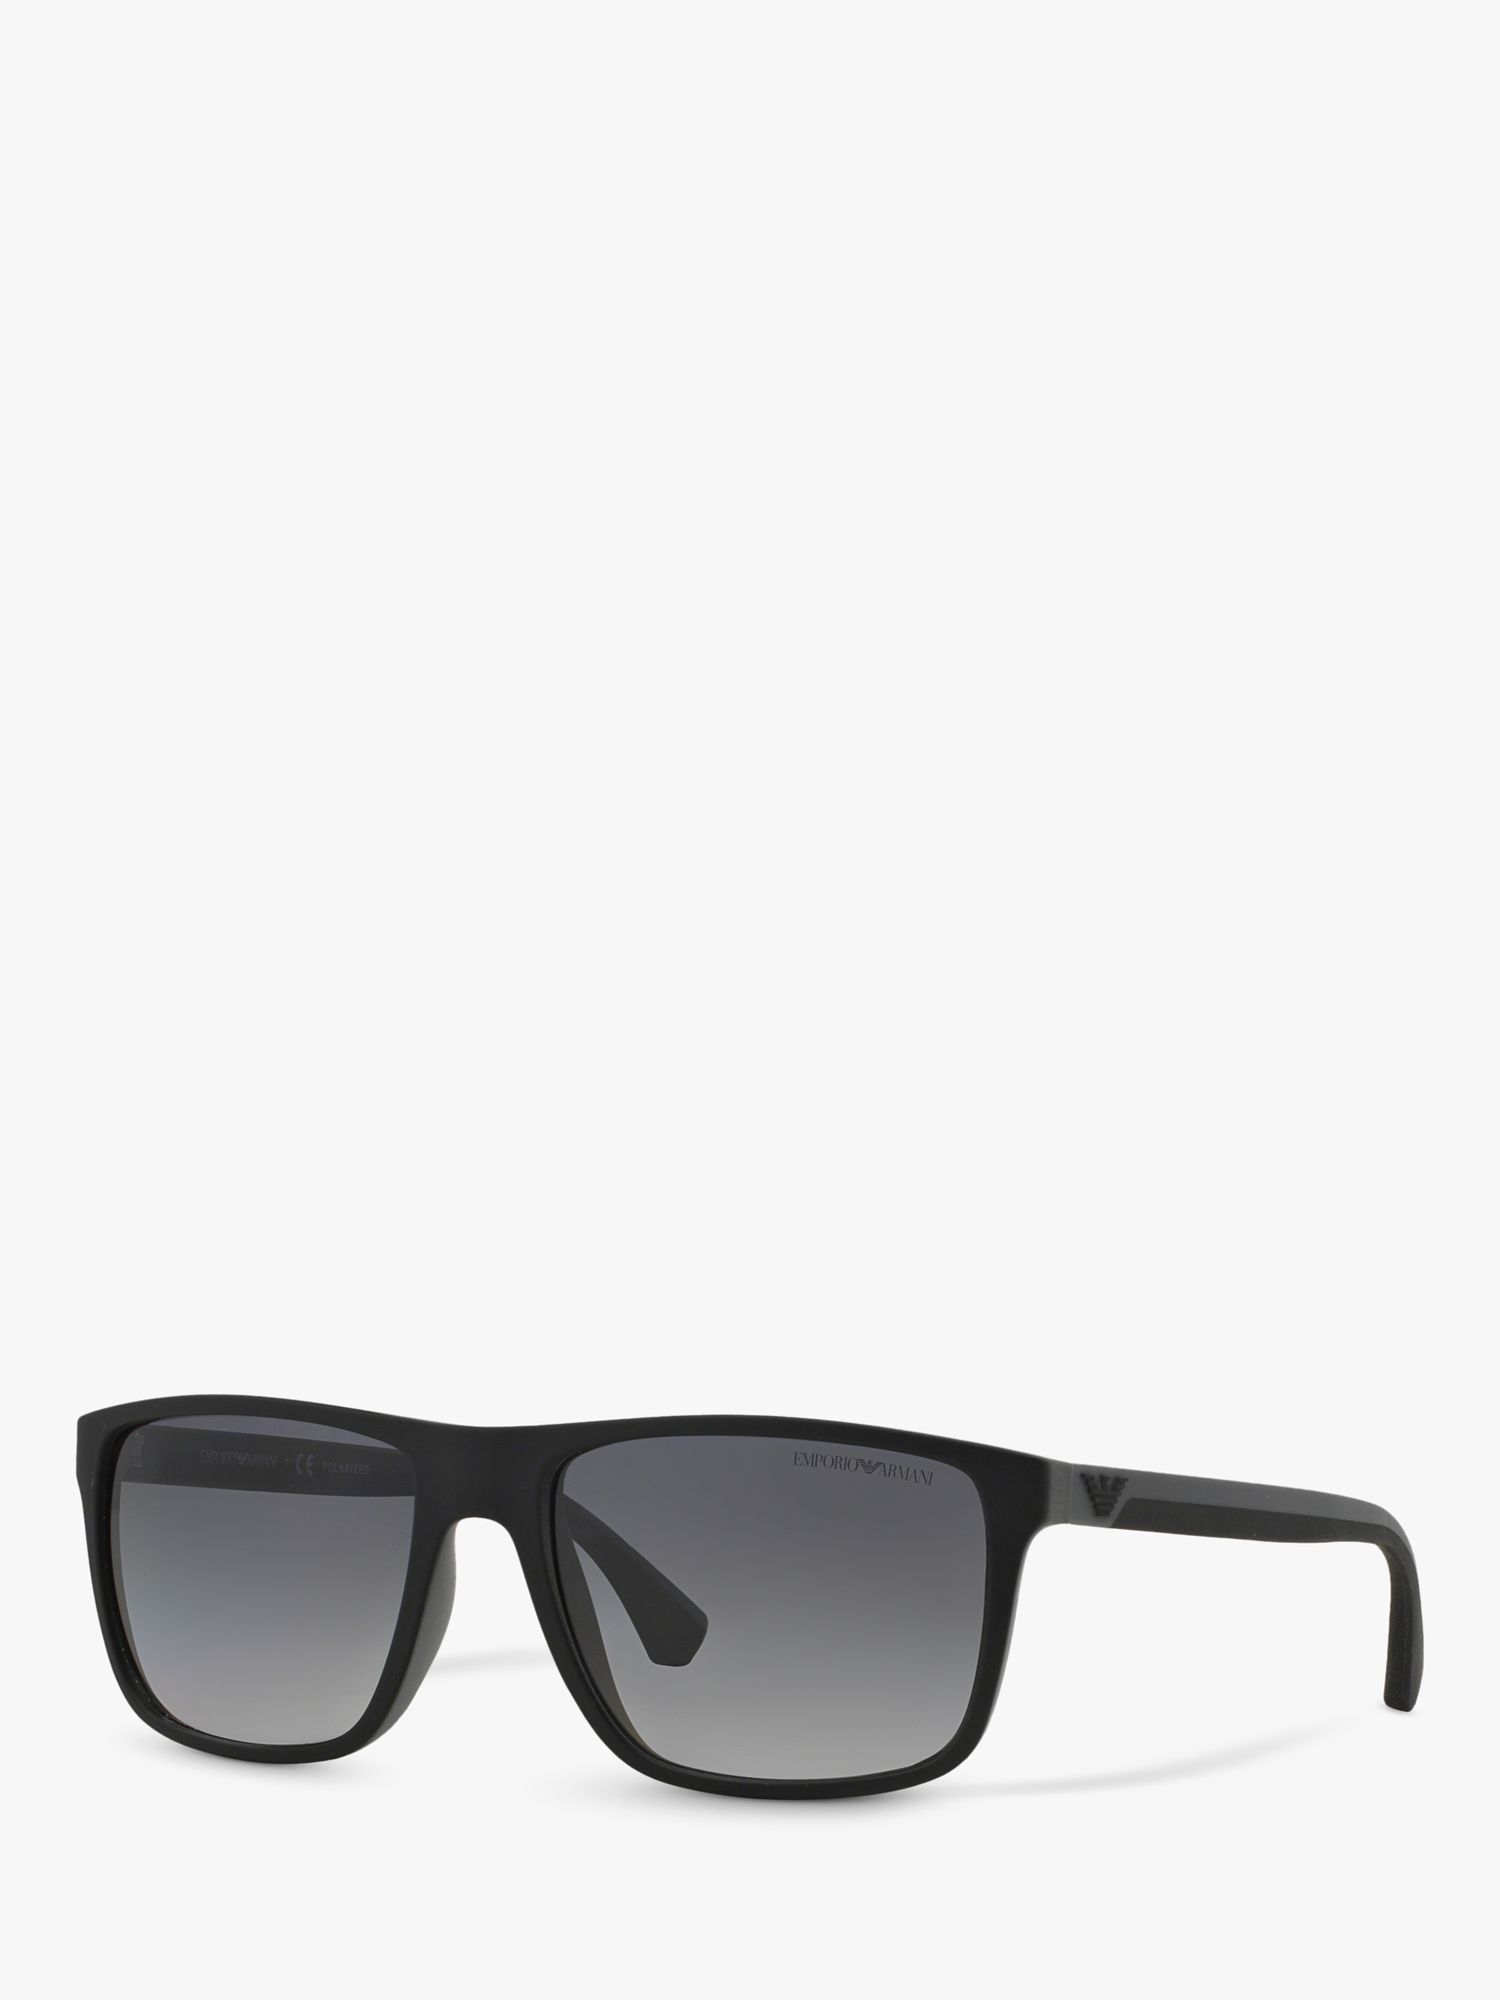 Emporio Armani EA4033 Square Sunglasses, Black at John Lewis & Partners